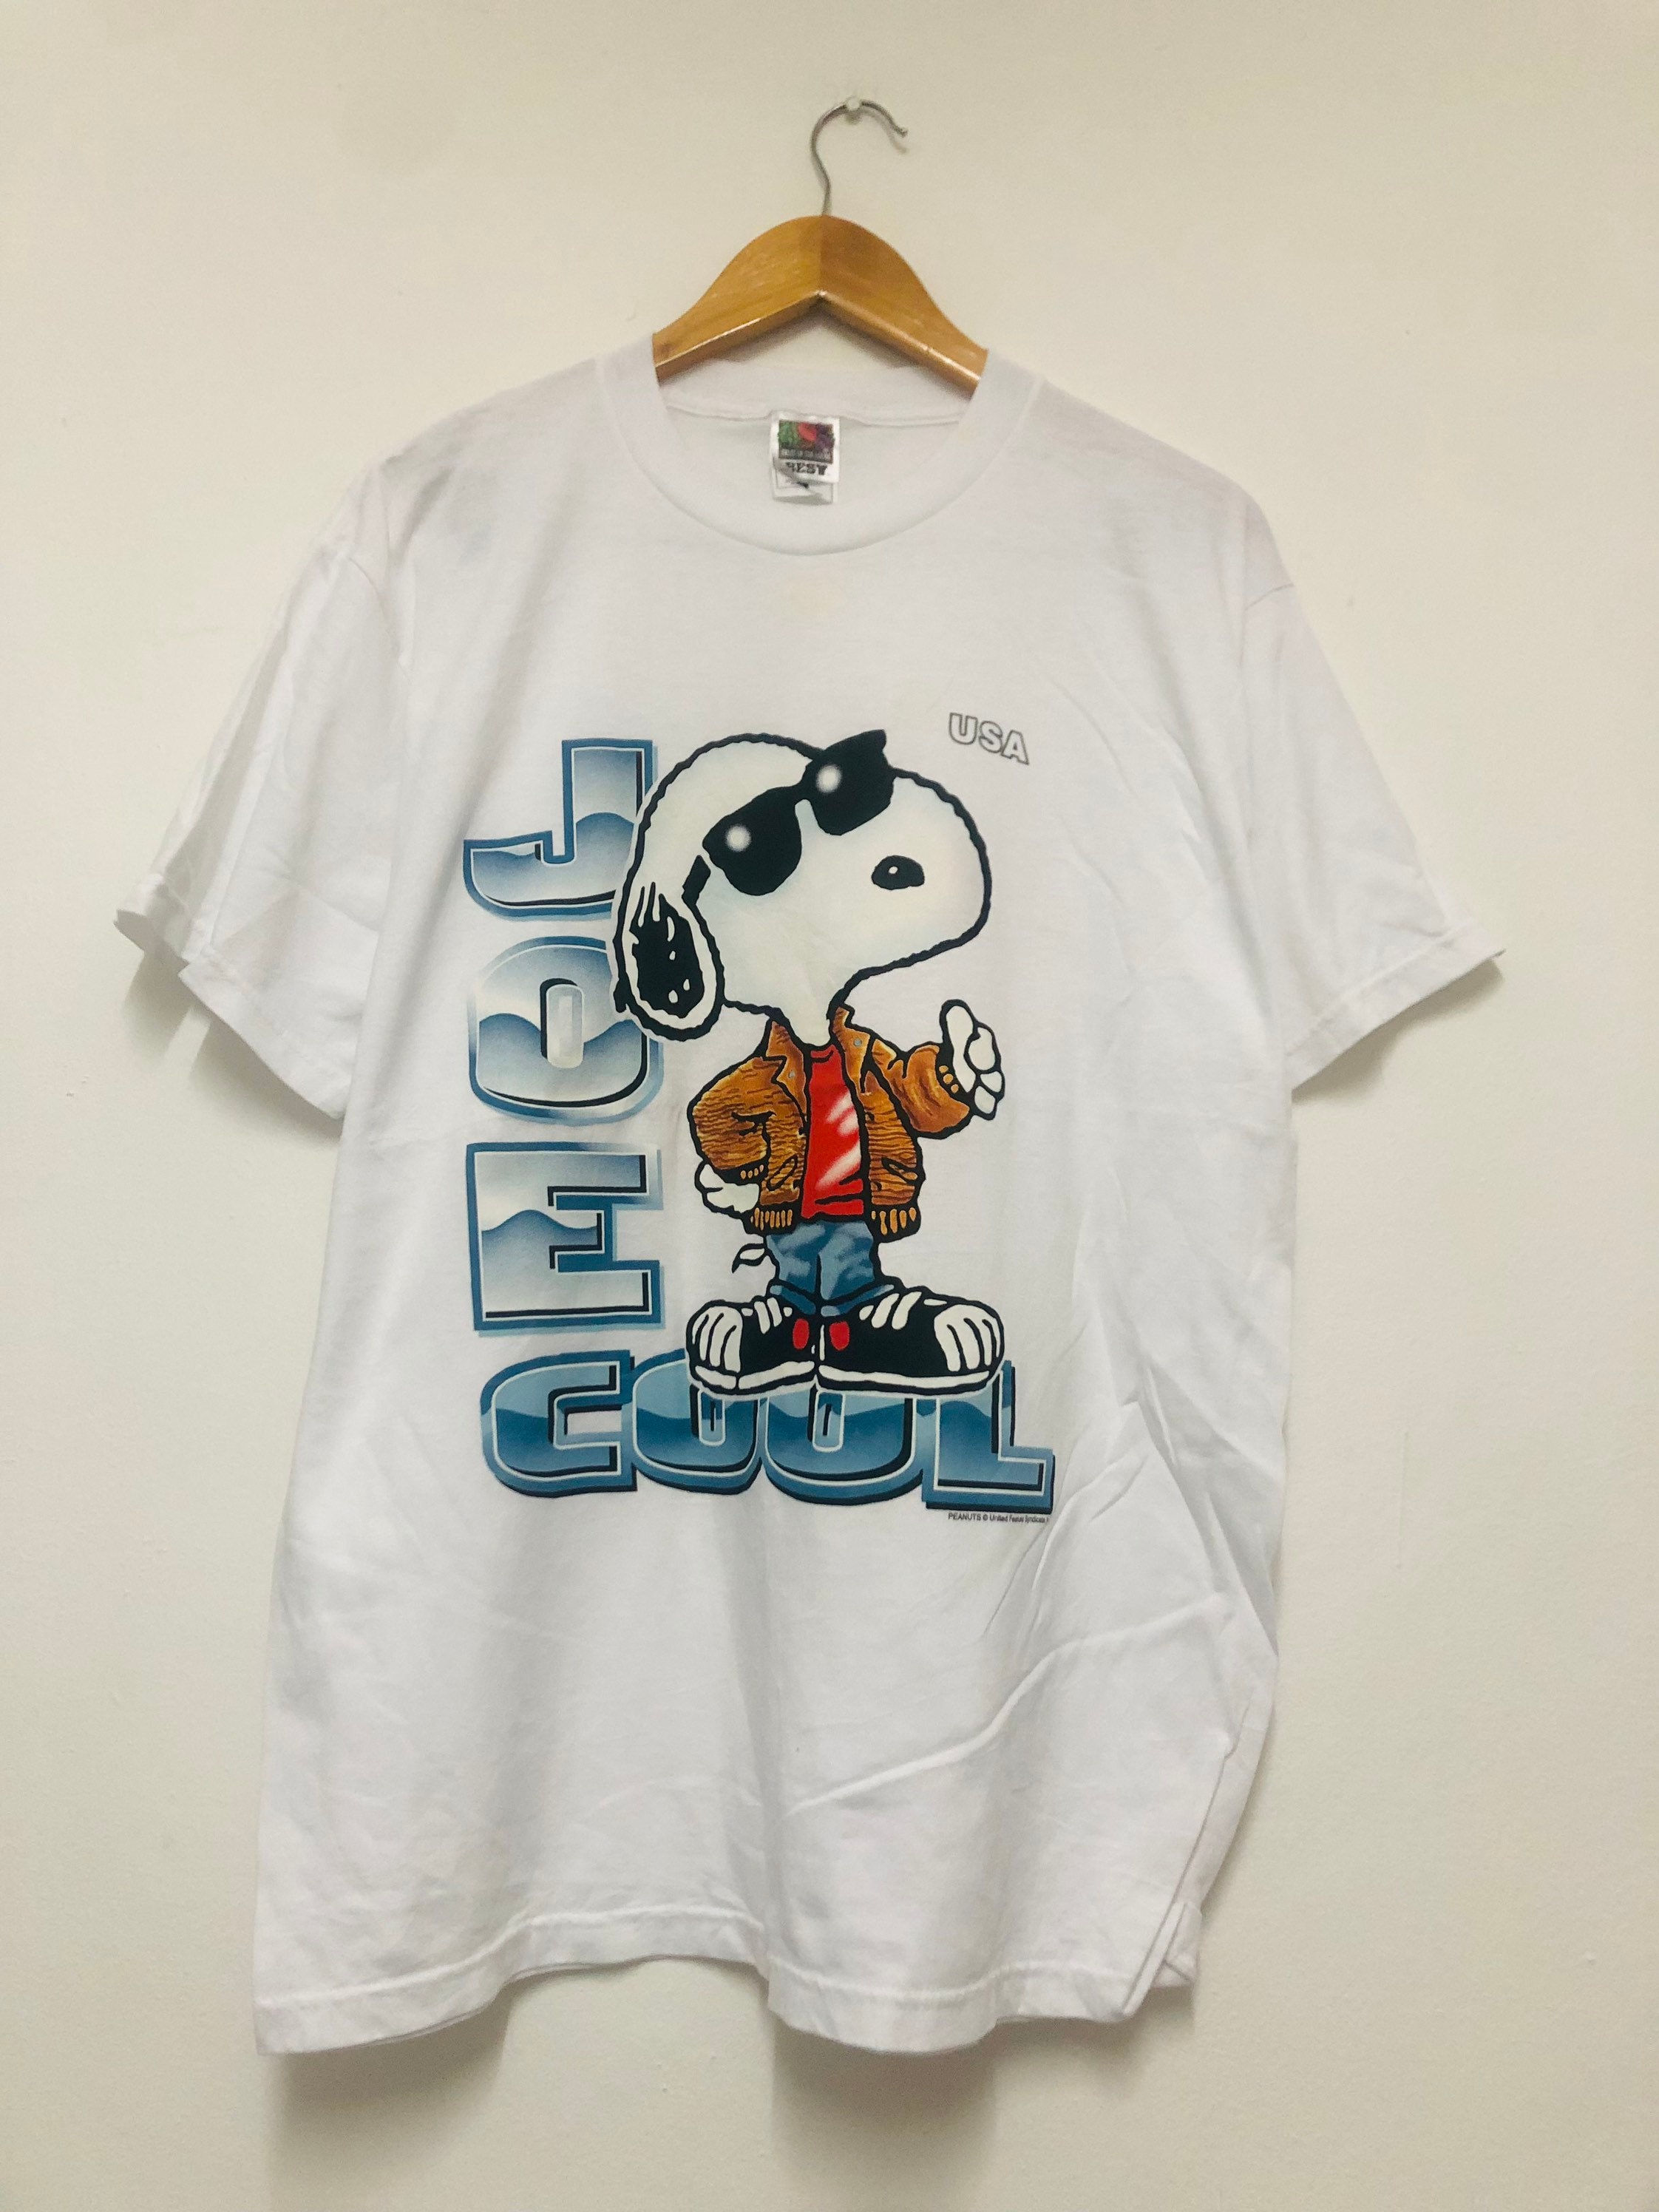 - Snoopy Shirt Joe Etsy Cool T